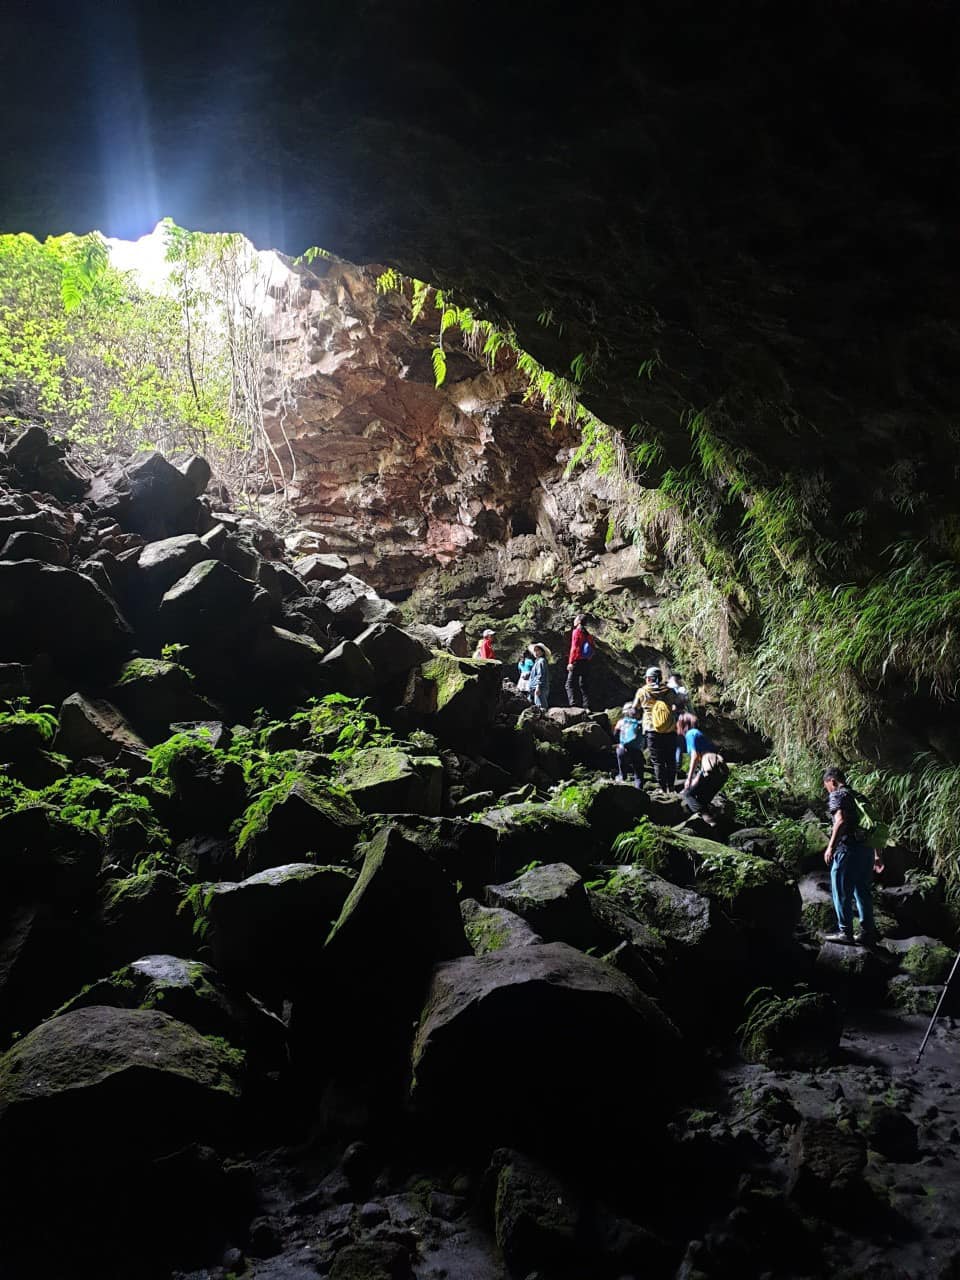 85B：（2 天）Chu Bluk、Dray Nu、南部最大的火山洞穴和瀑布系统的壮丽奇观